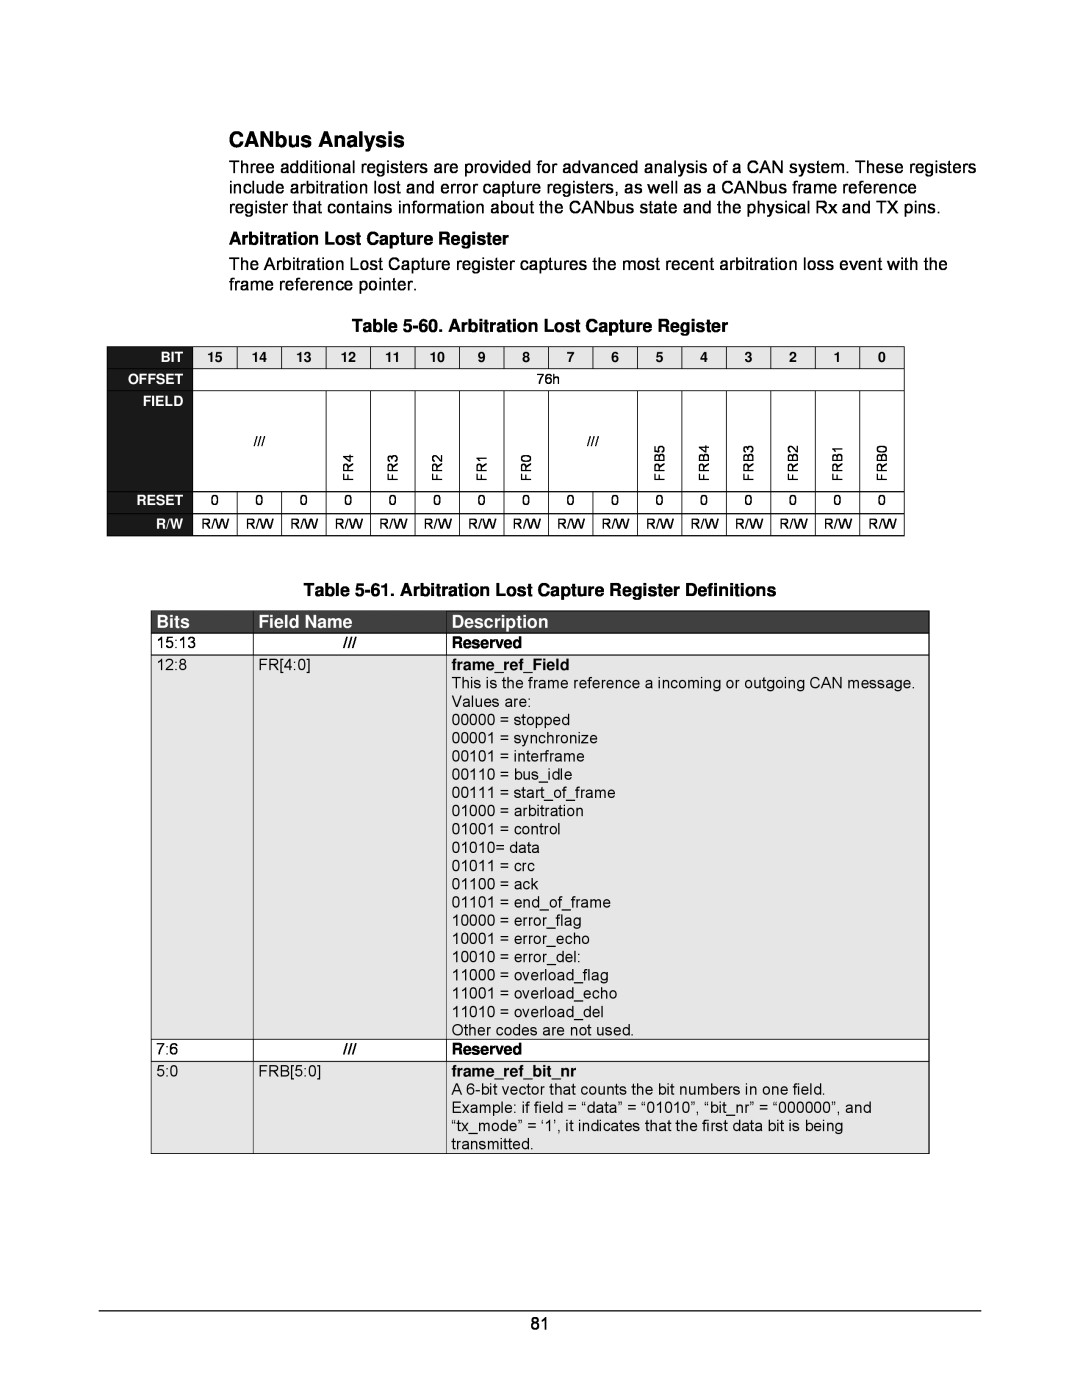 Lantronix DSTni-EX manual CANbus Analysis, 60. Arbitration Lost Capture Register 